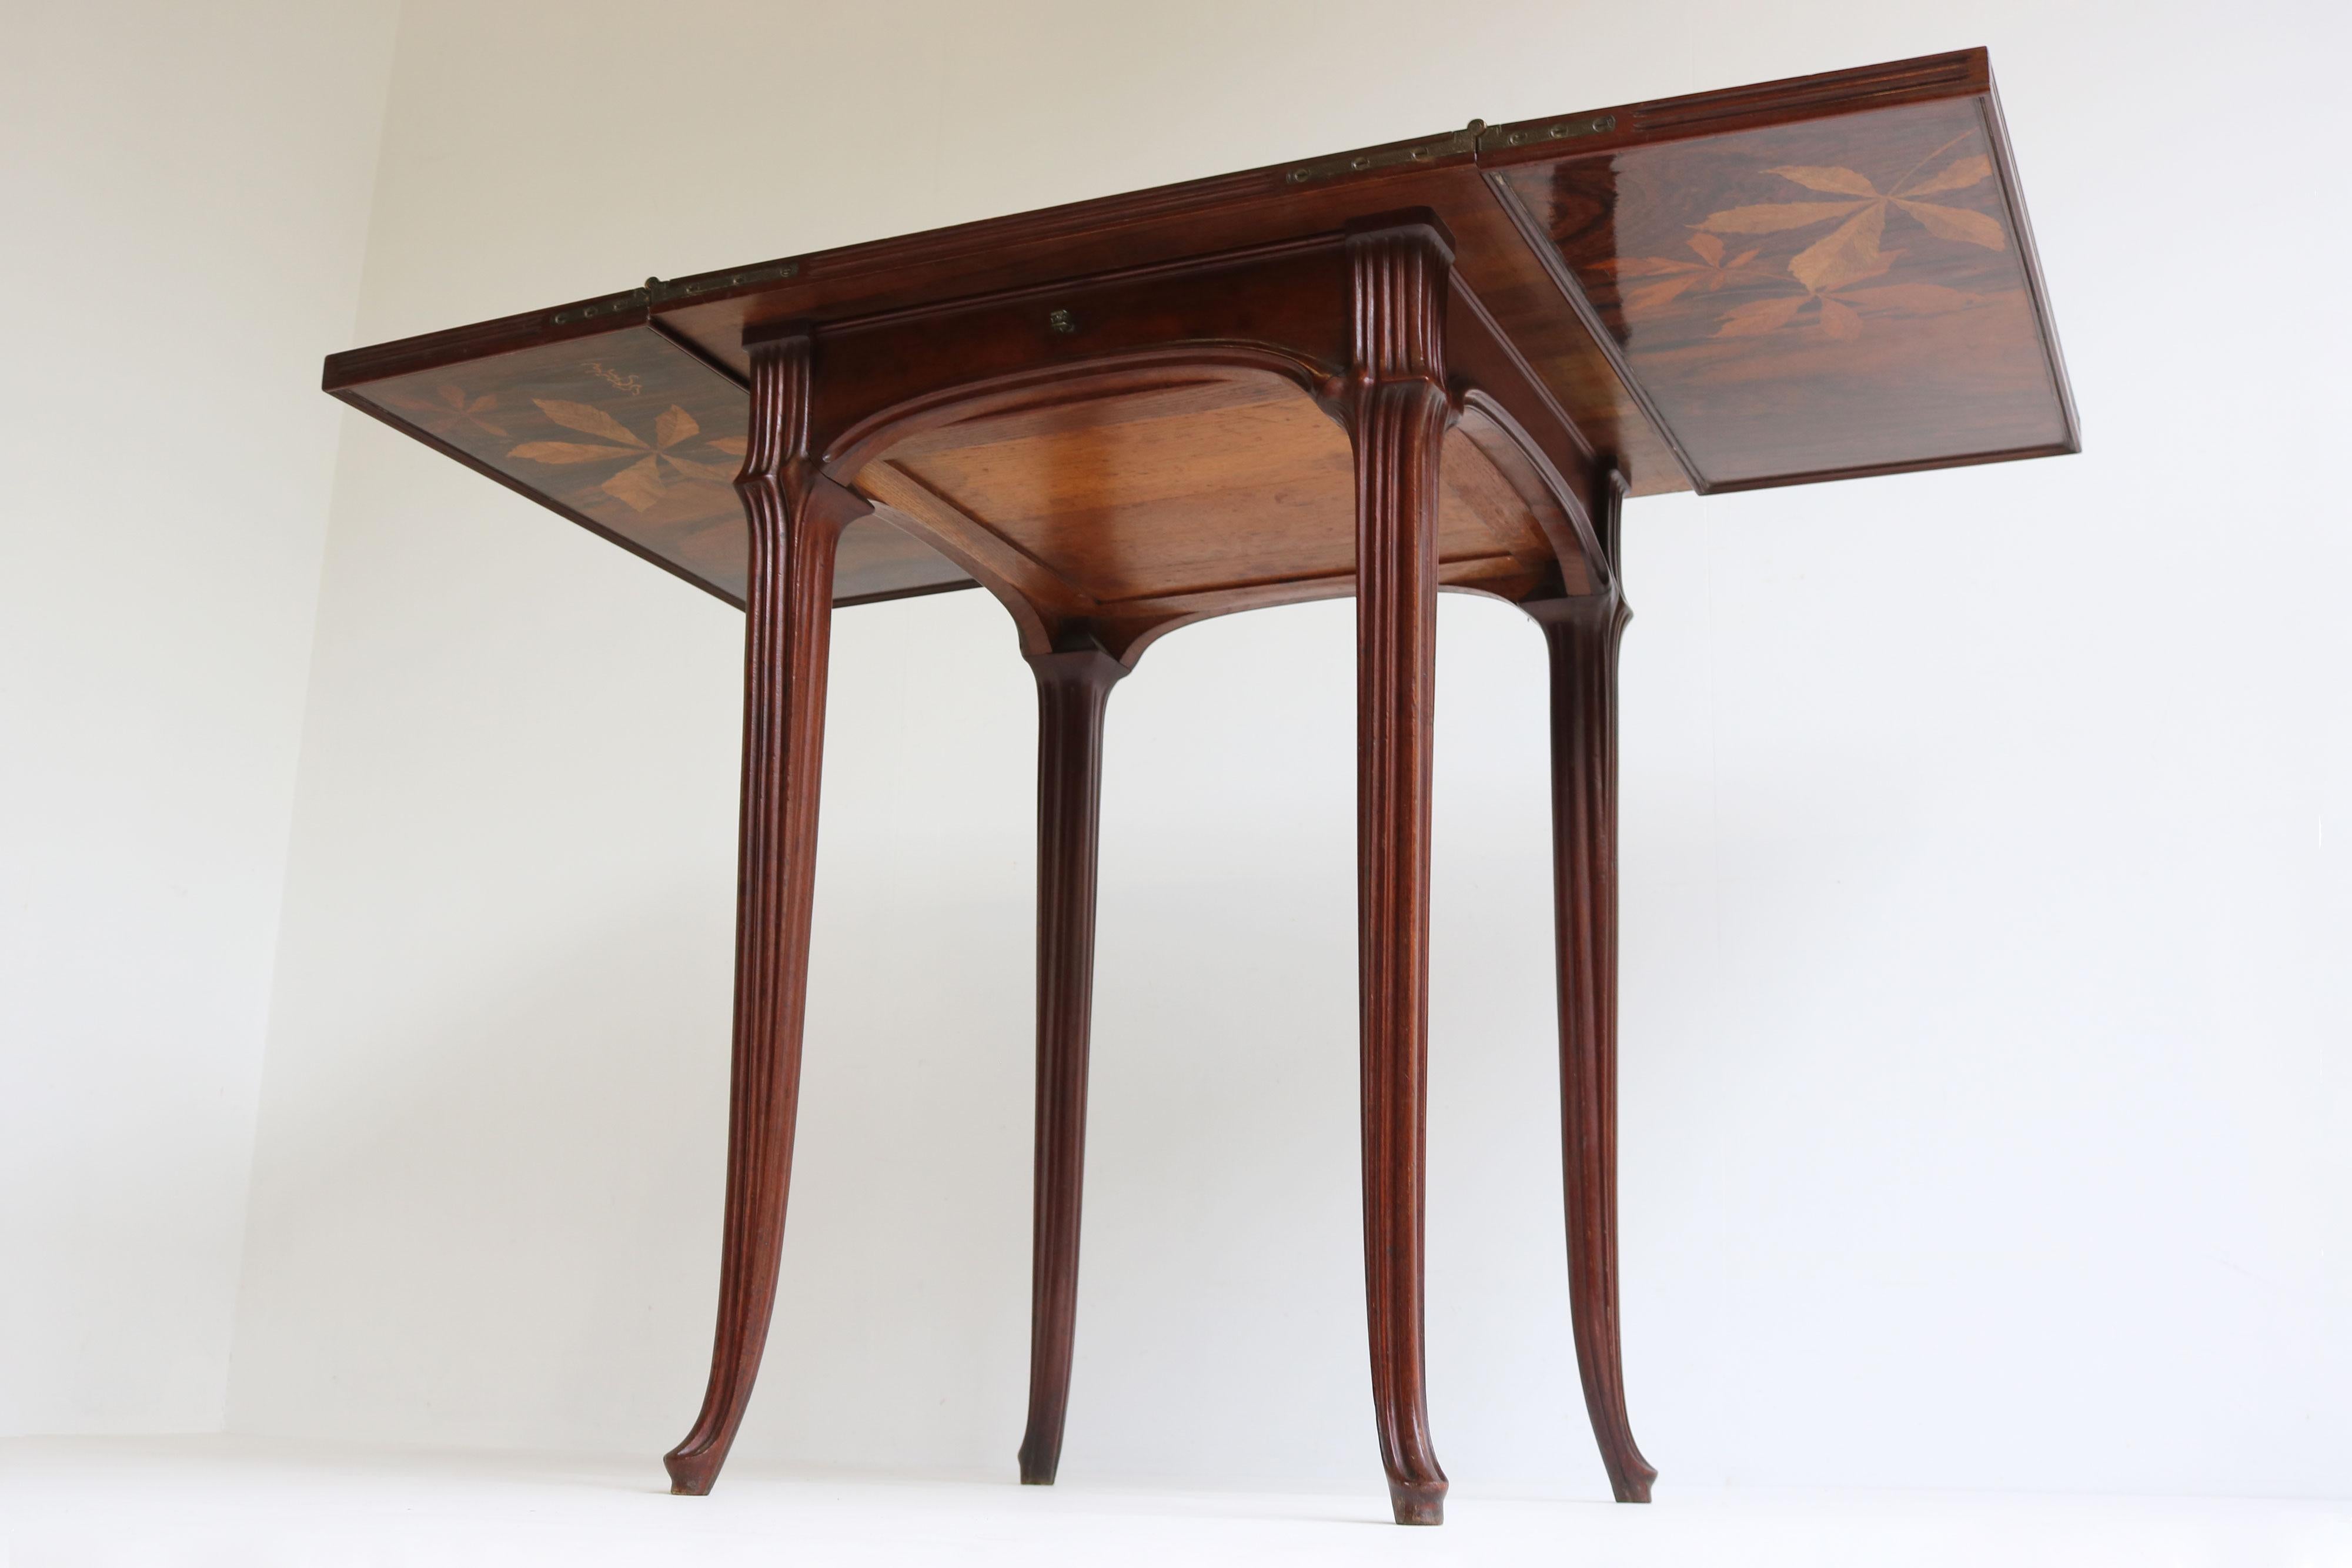 Original French Art Nouveau game table / side table by Emile Gallé 1905 chestnut In Good Condition For Sale In Ijzendijke, NL